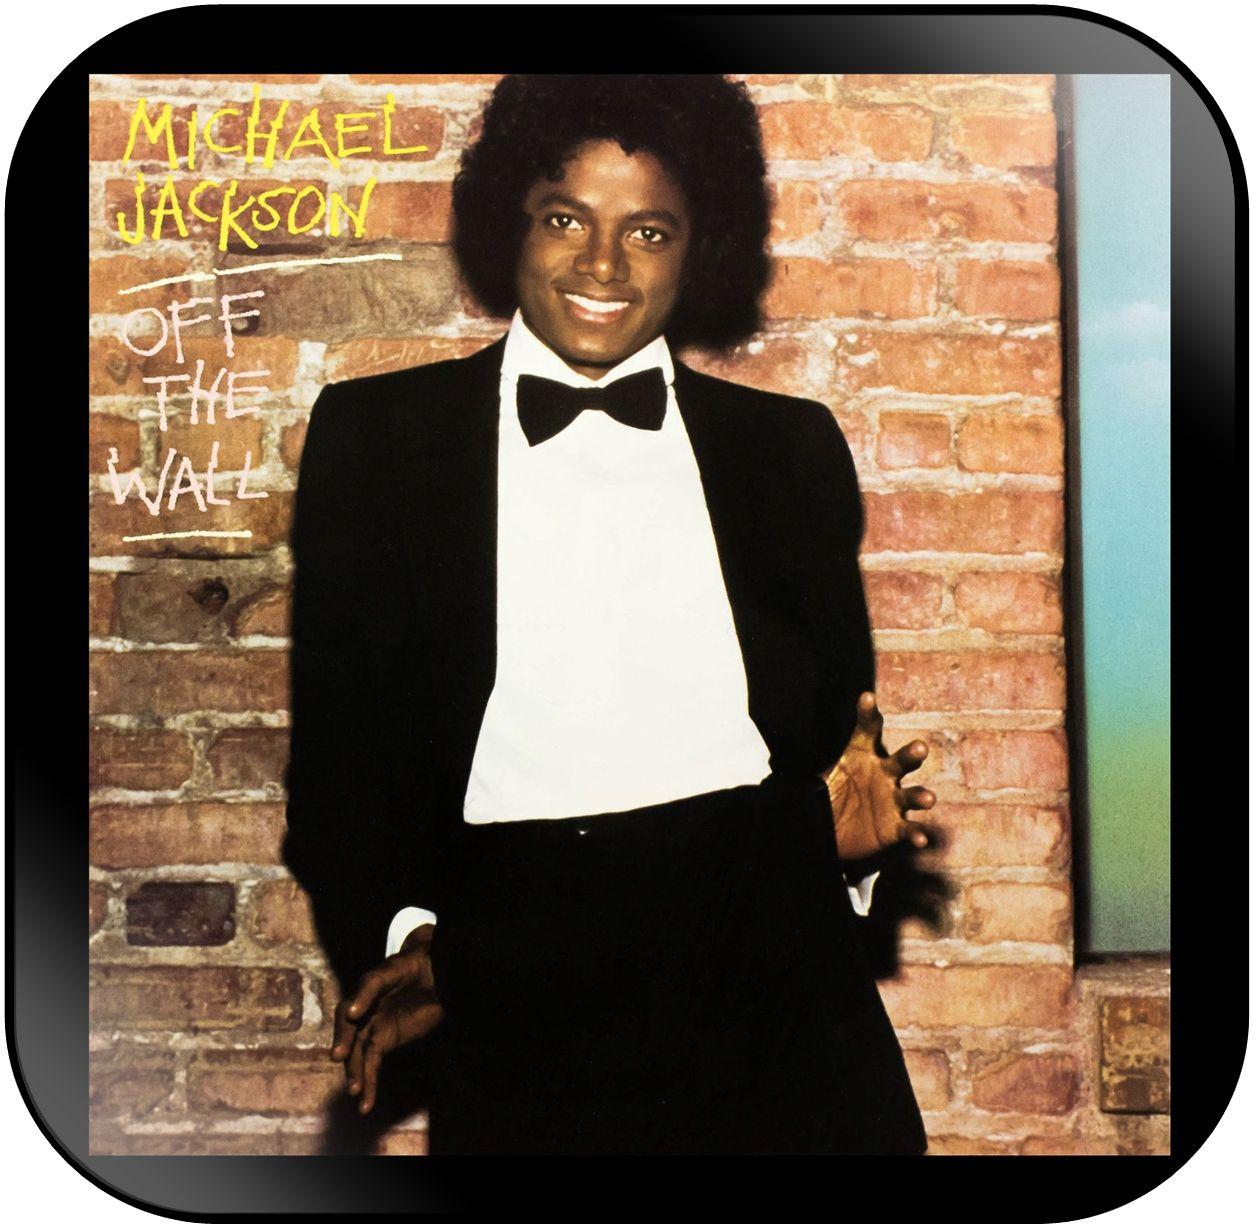 Off the Wall Album Logo - Michael Jackson Off the Wall Album Cover Sticker